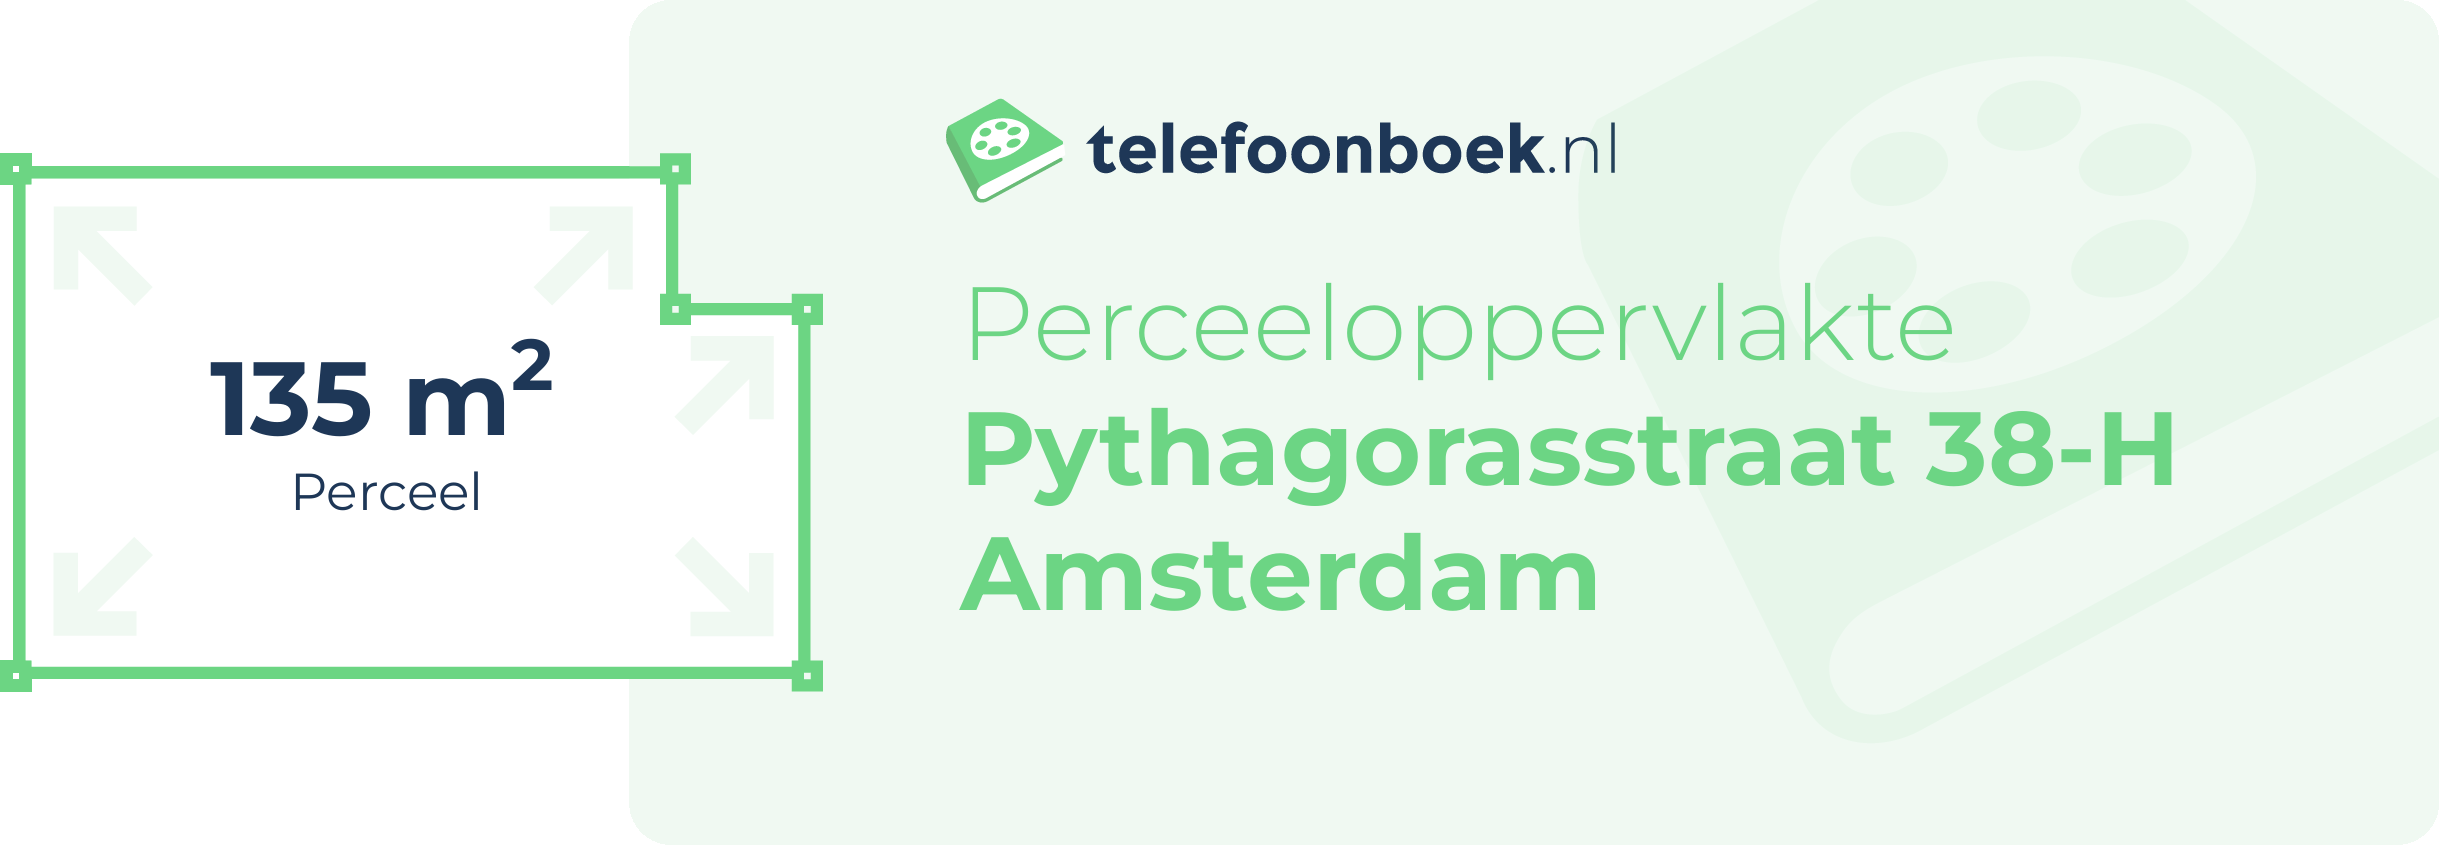 Perceeloppervlakte Pythagorasstraat 38-H Amsterdam